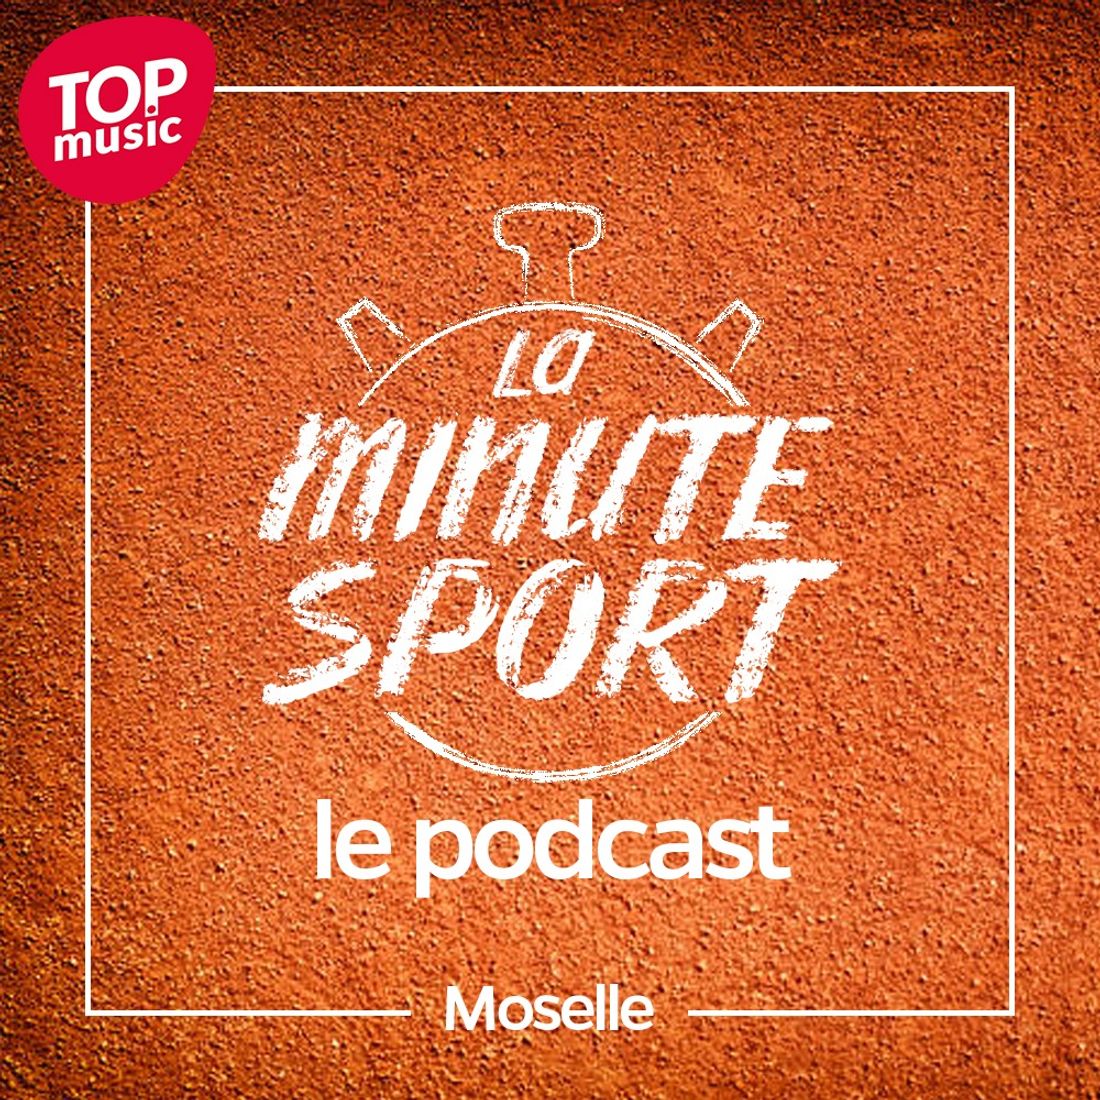 La Minute Sport - Moselle - EP10